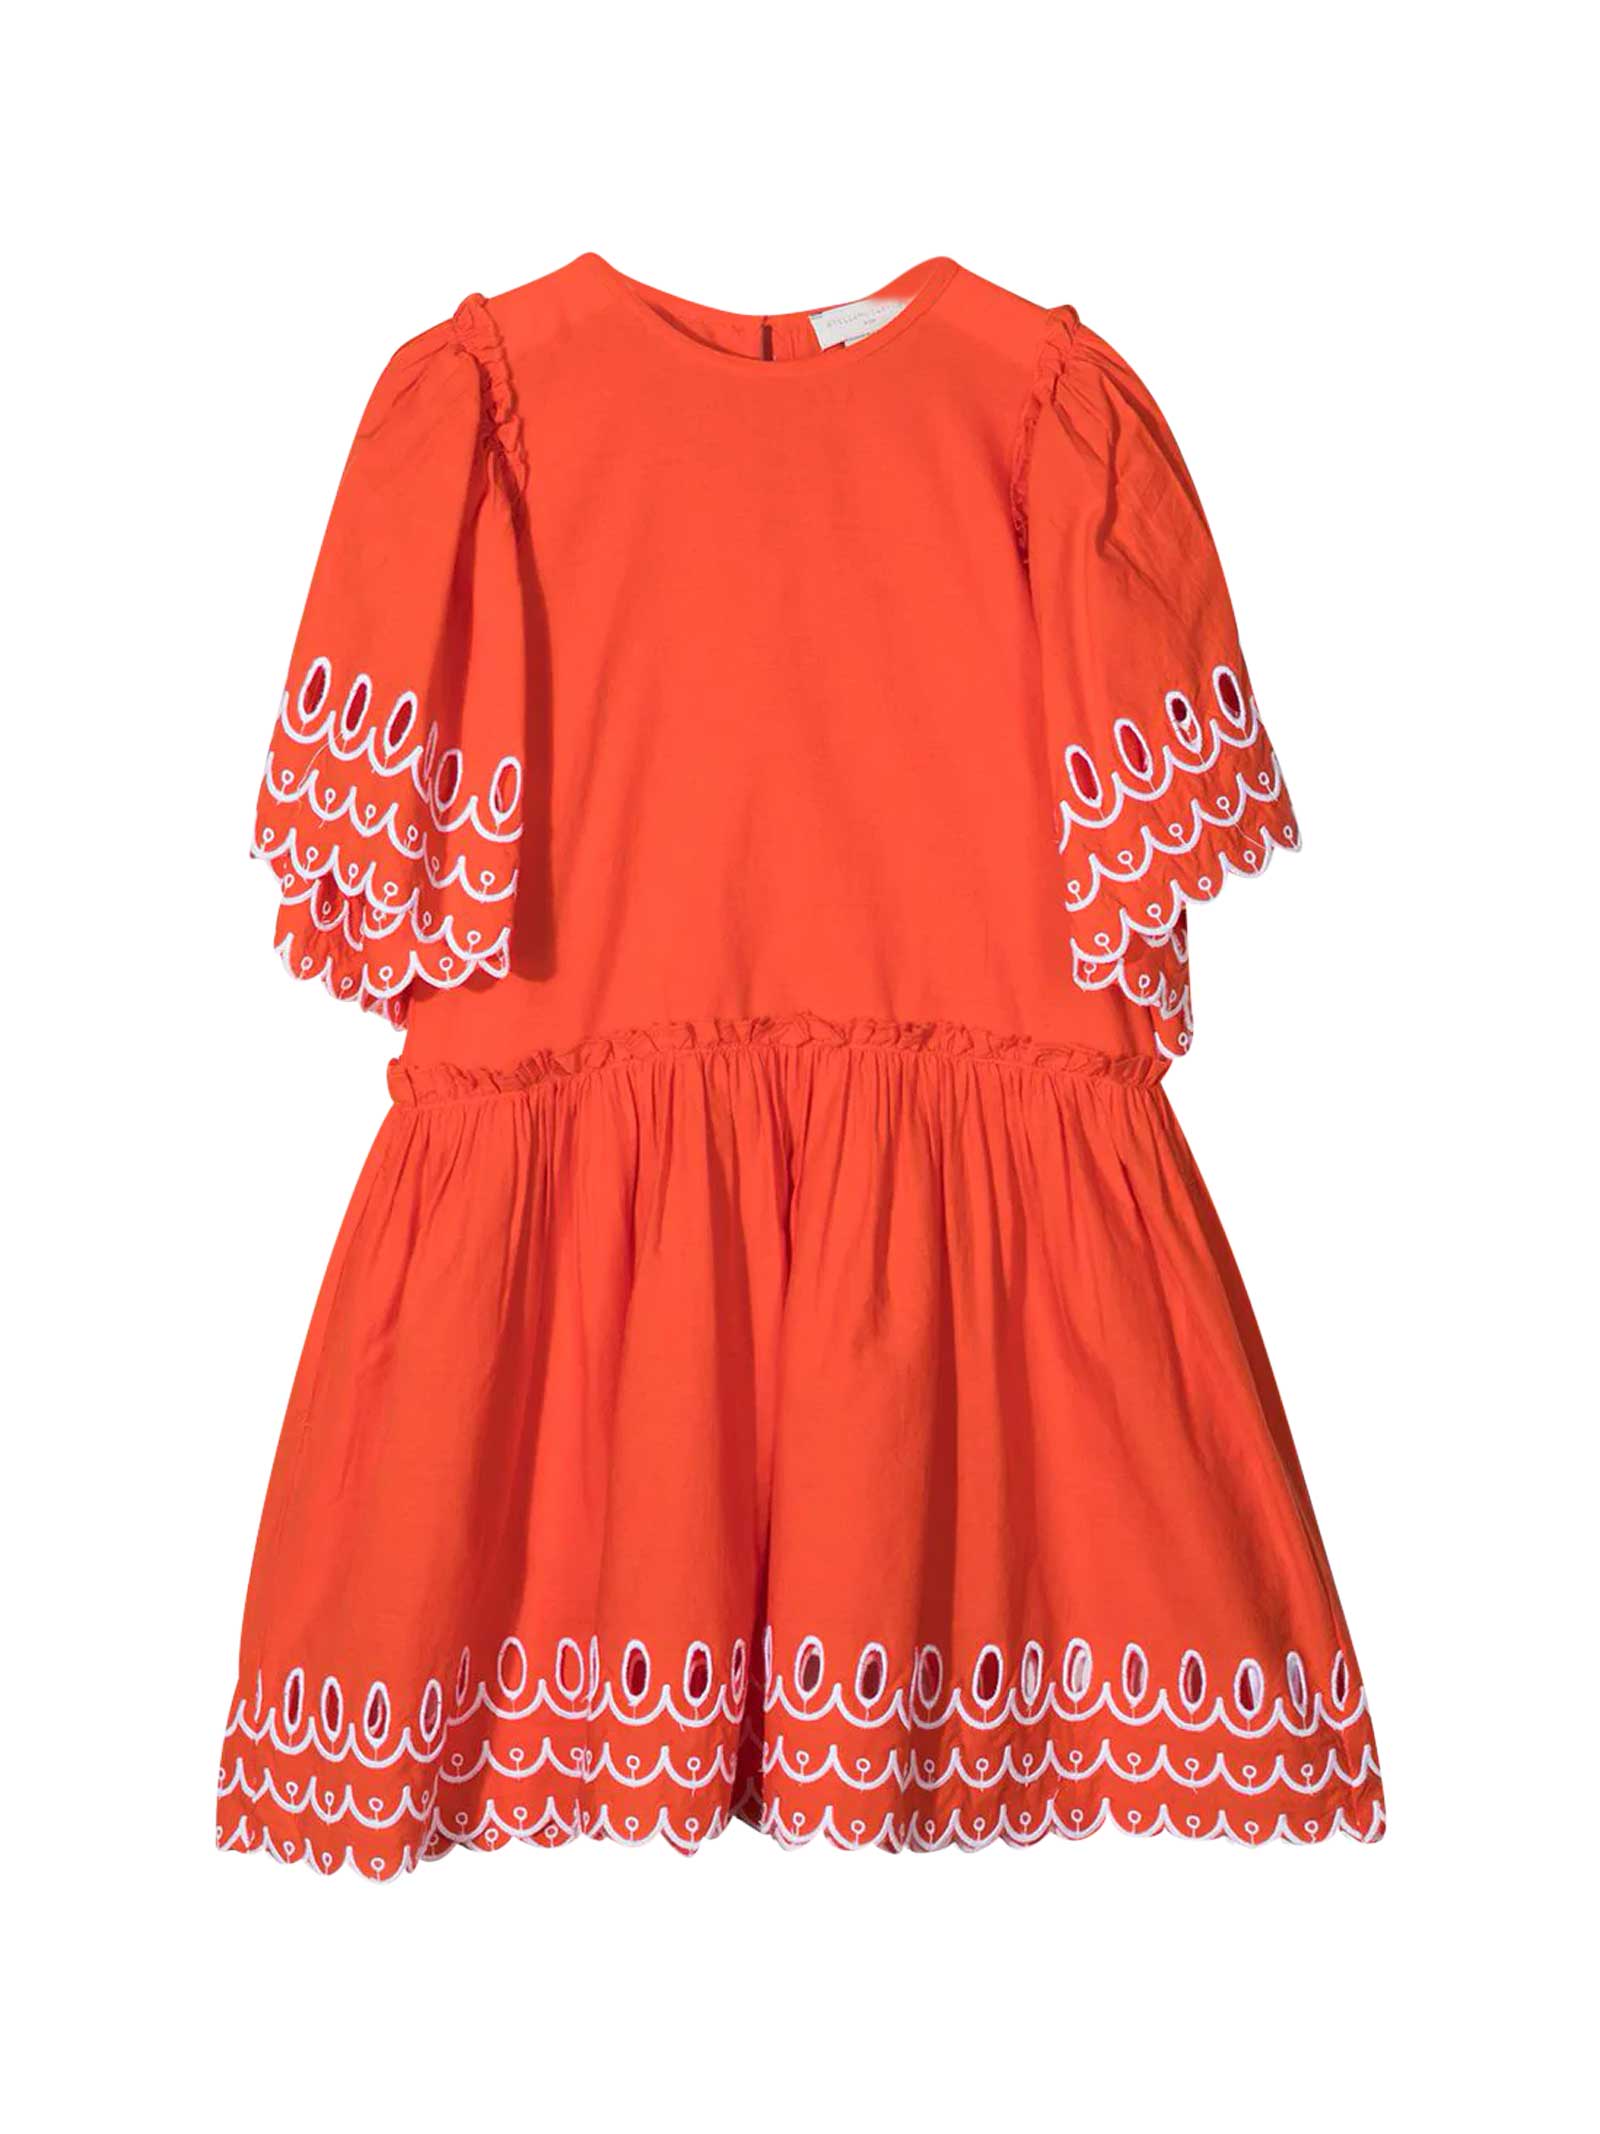 Stella McCartney Kids Orange Dress With White Details